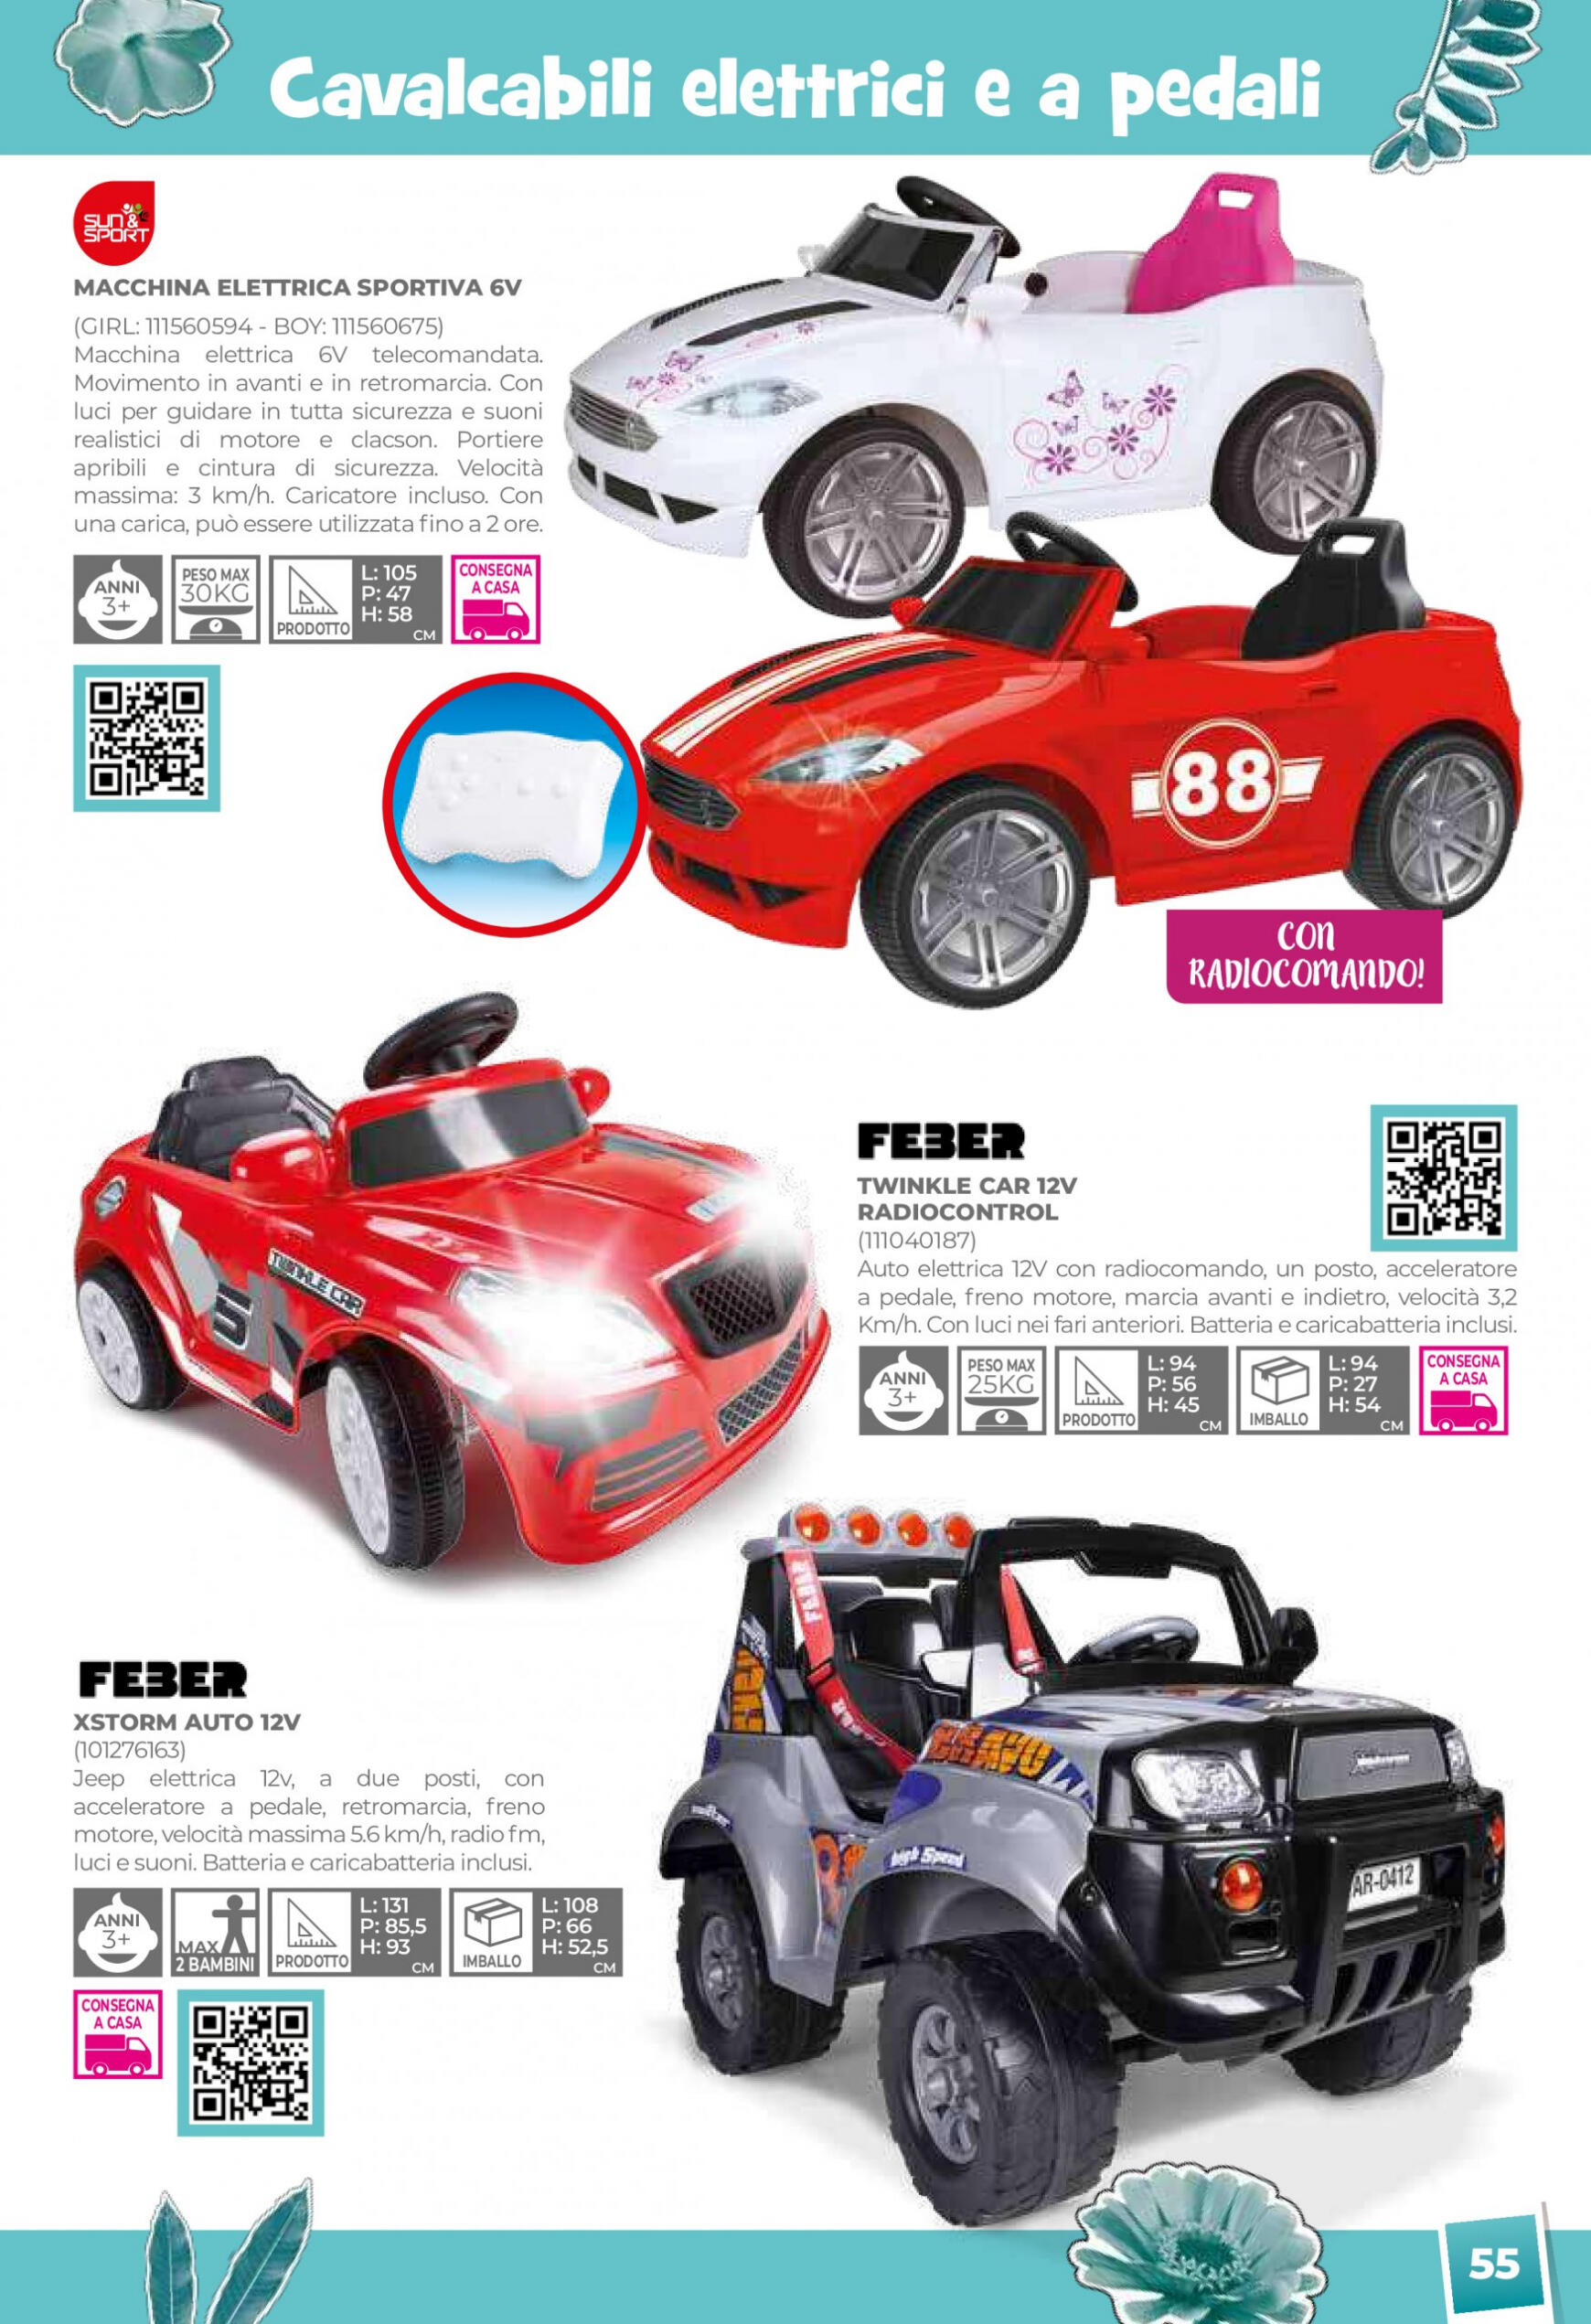 toys-center - Nuovo volantino Toys Center 01.05. - 31.12. - page: 57